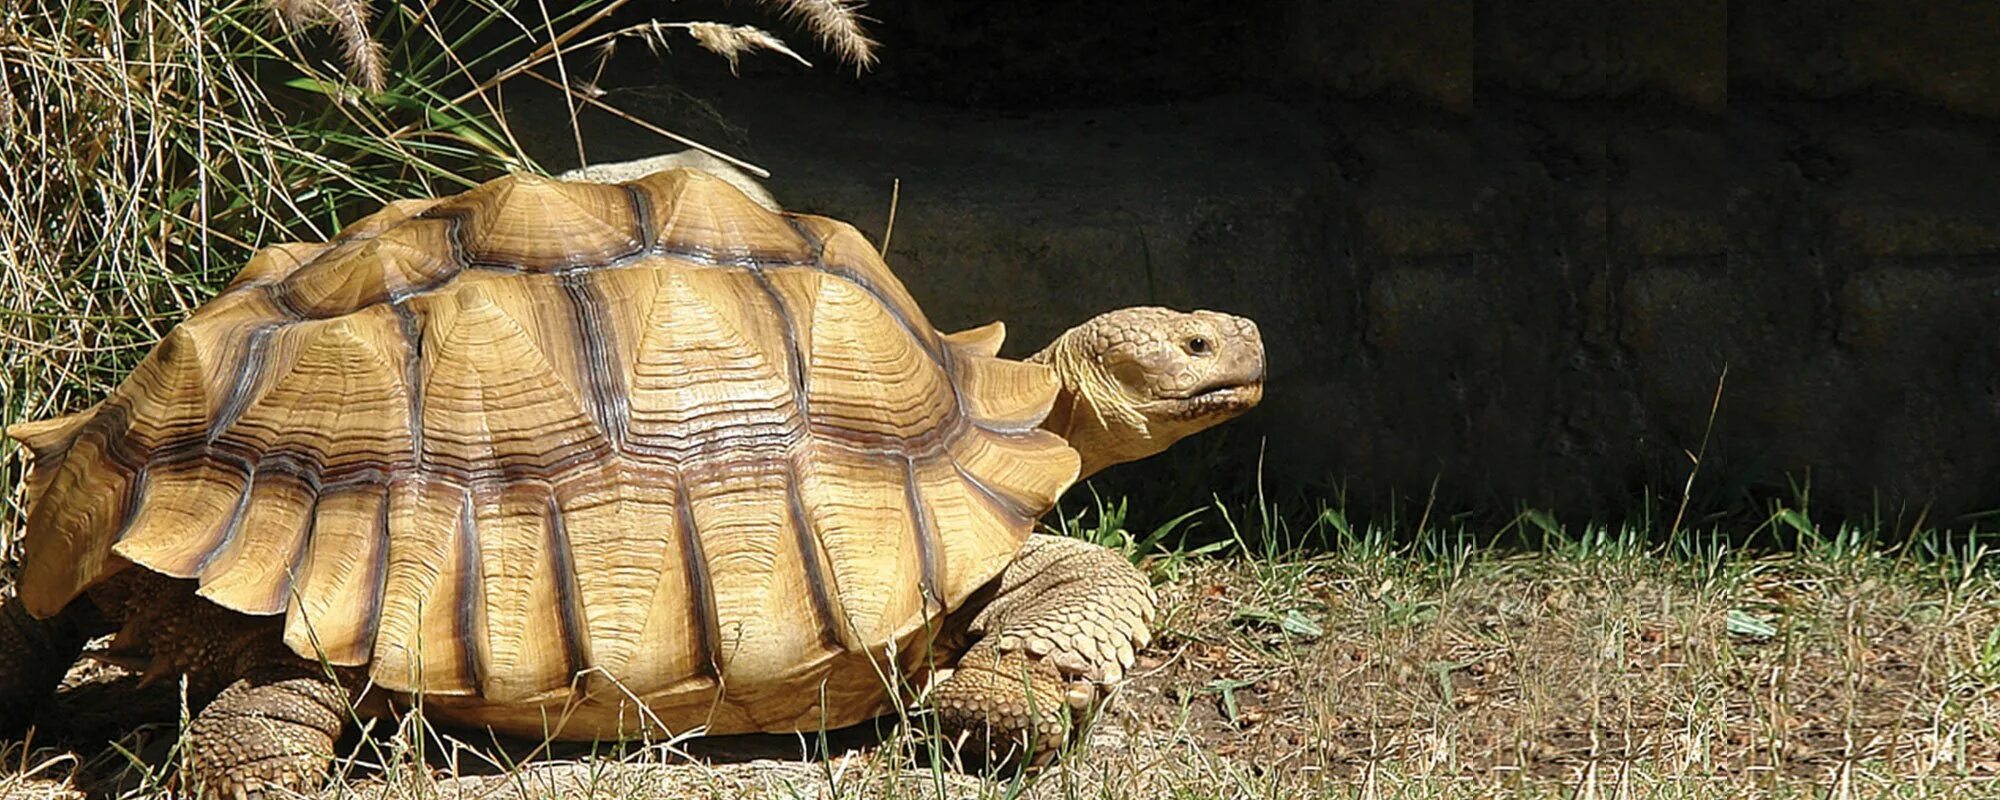 Желтоногая черепаха шабути. Африканская шпороносная черепаха. Шпороносная черепаха Сухопутные черепахи. Geochelone sulcata.